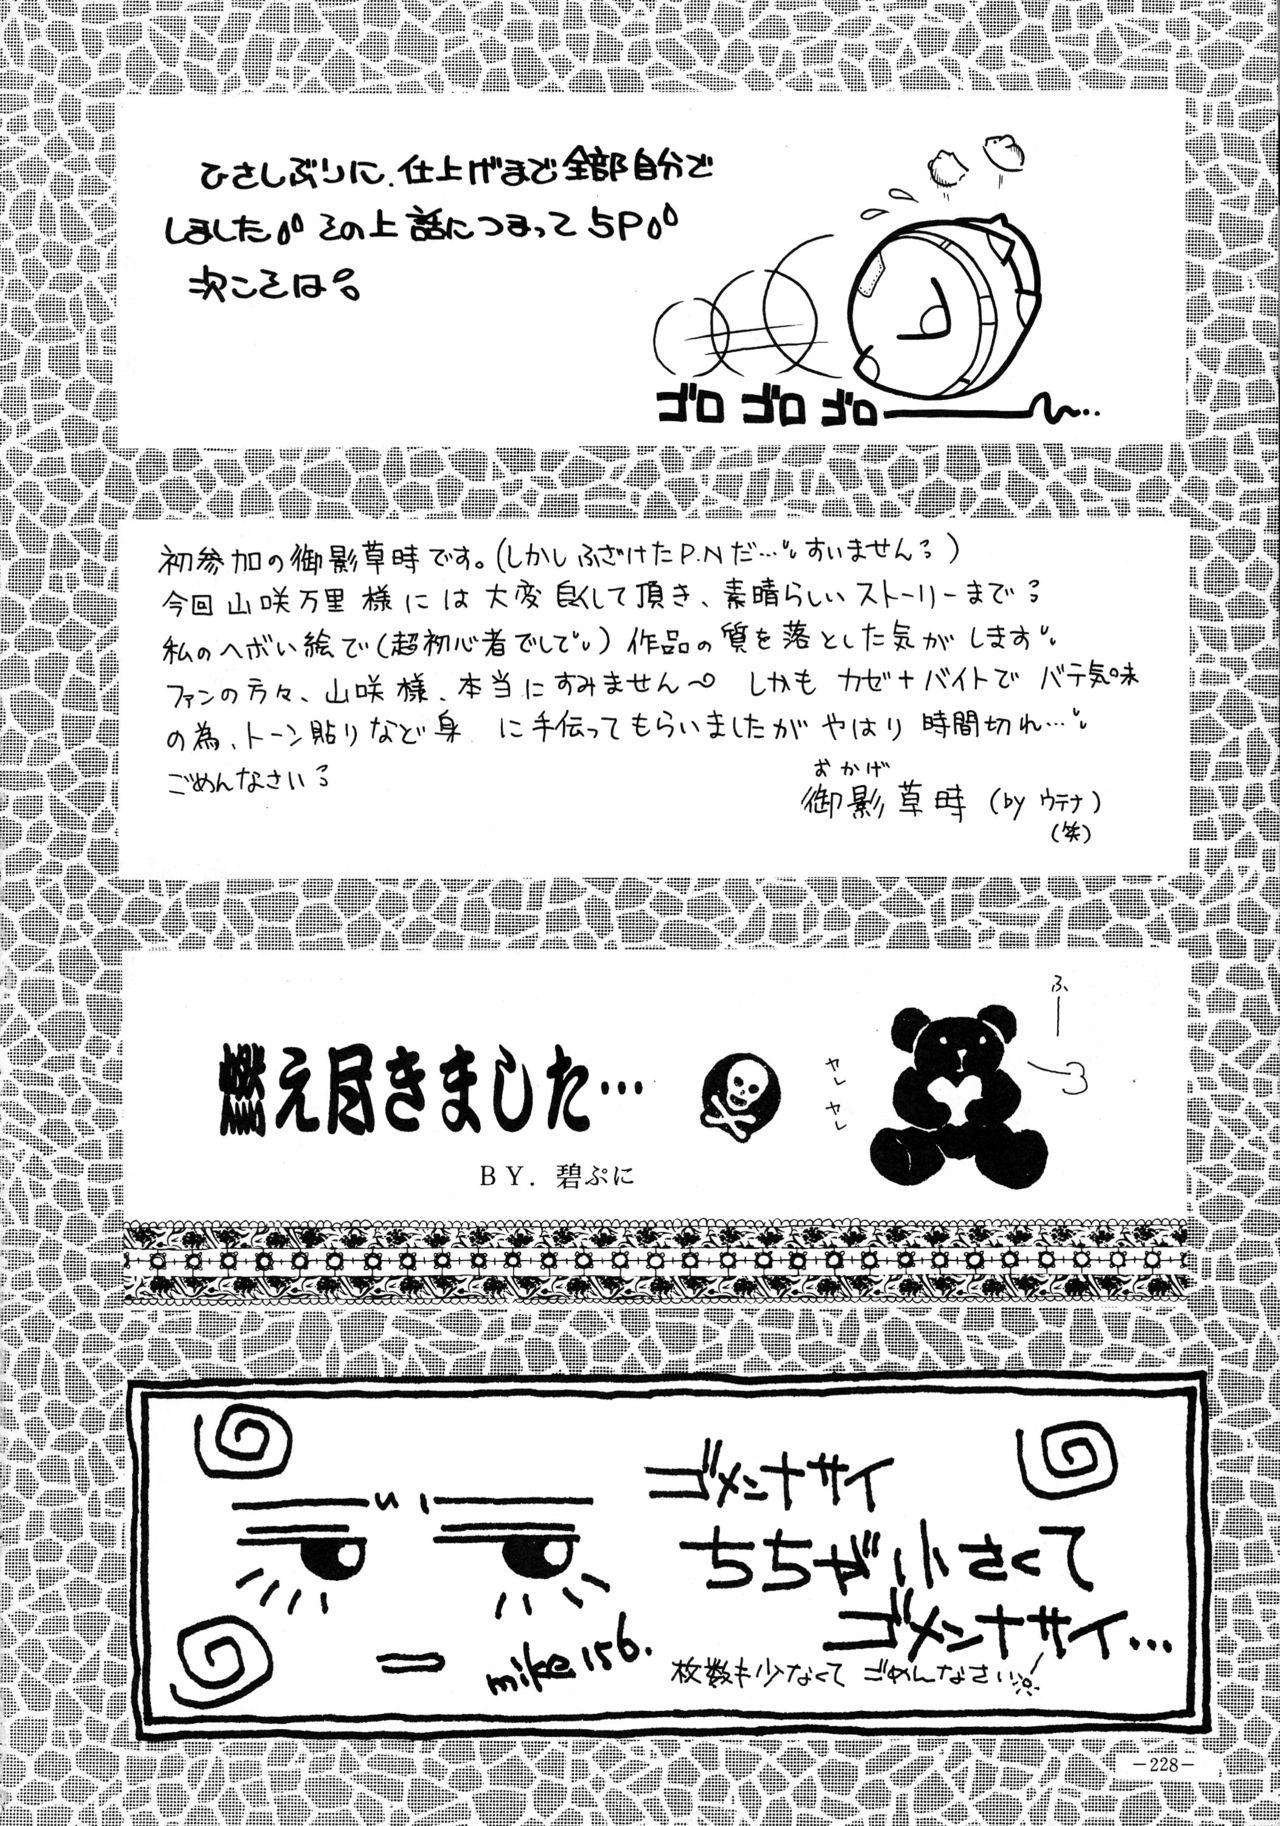 Rougetsu Toshi - Misty Moon Metropolis COMIC BOOK VIII 226